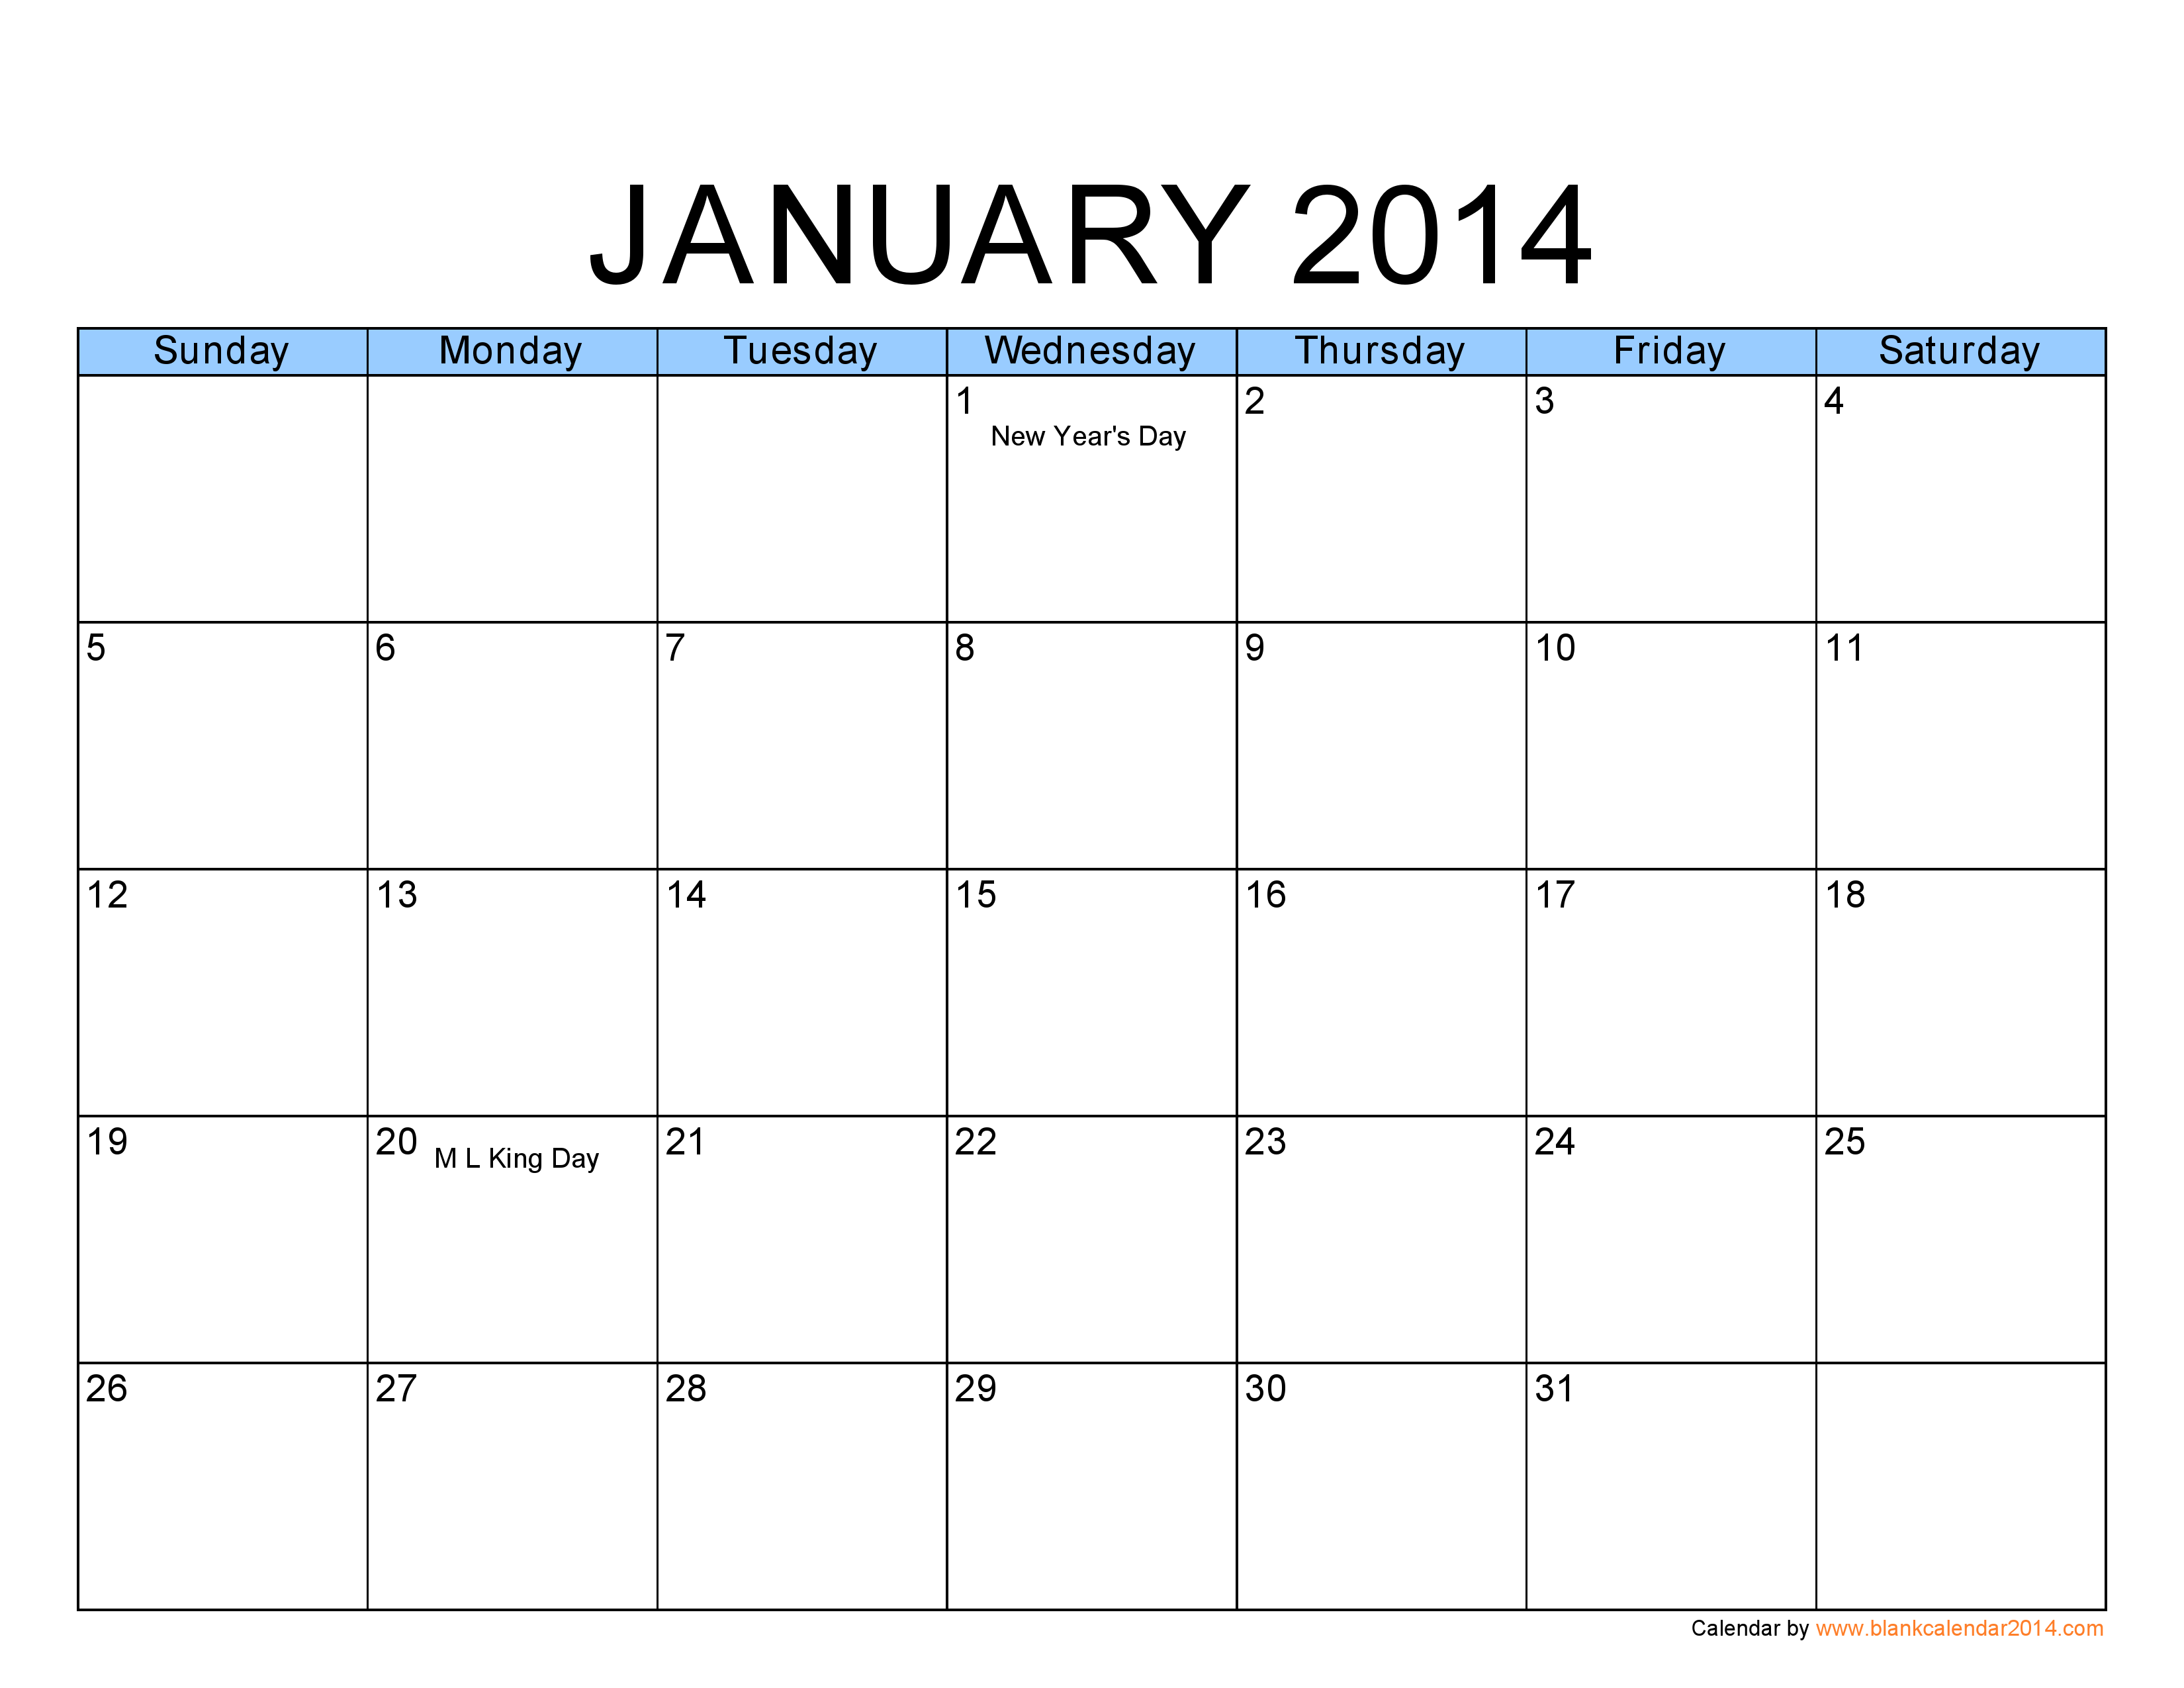 January 2014 Calendar Template